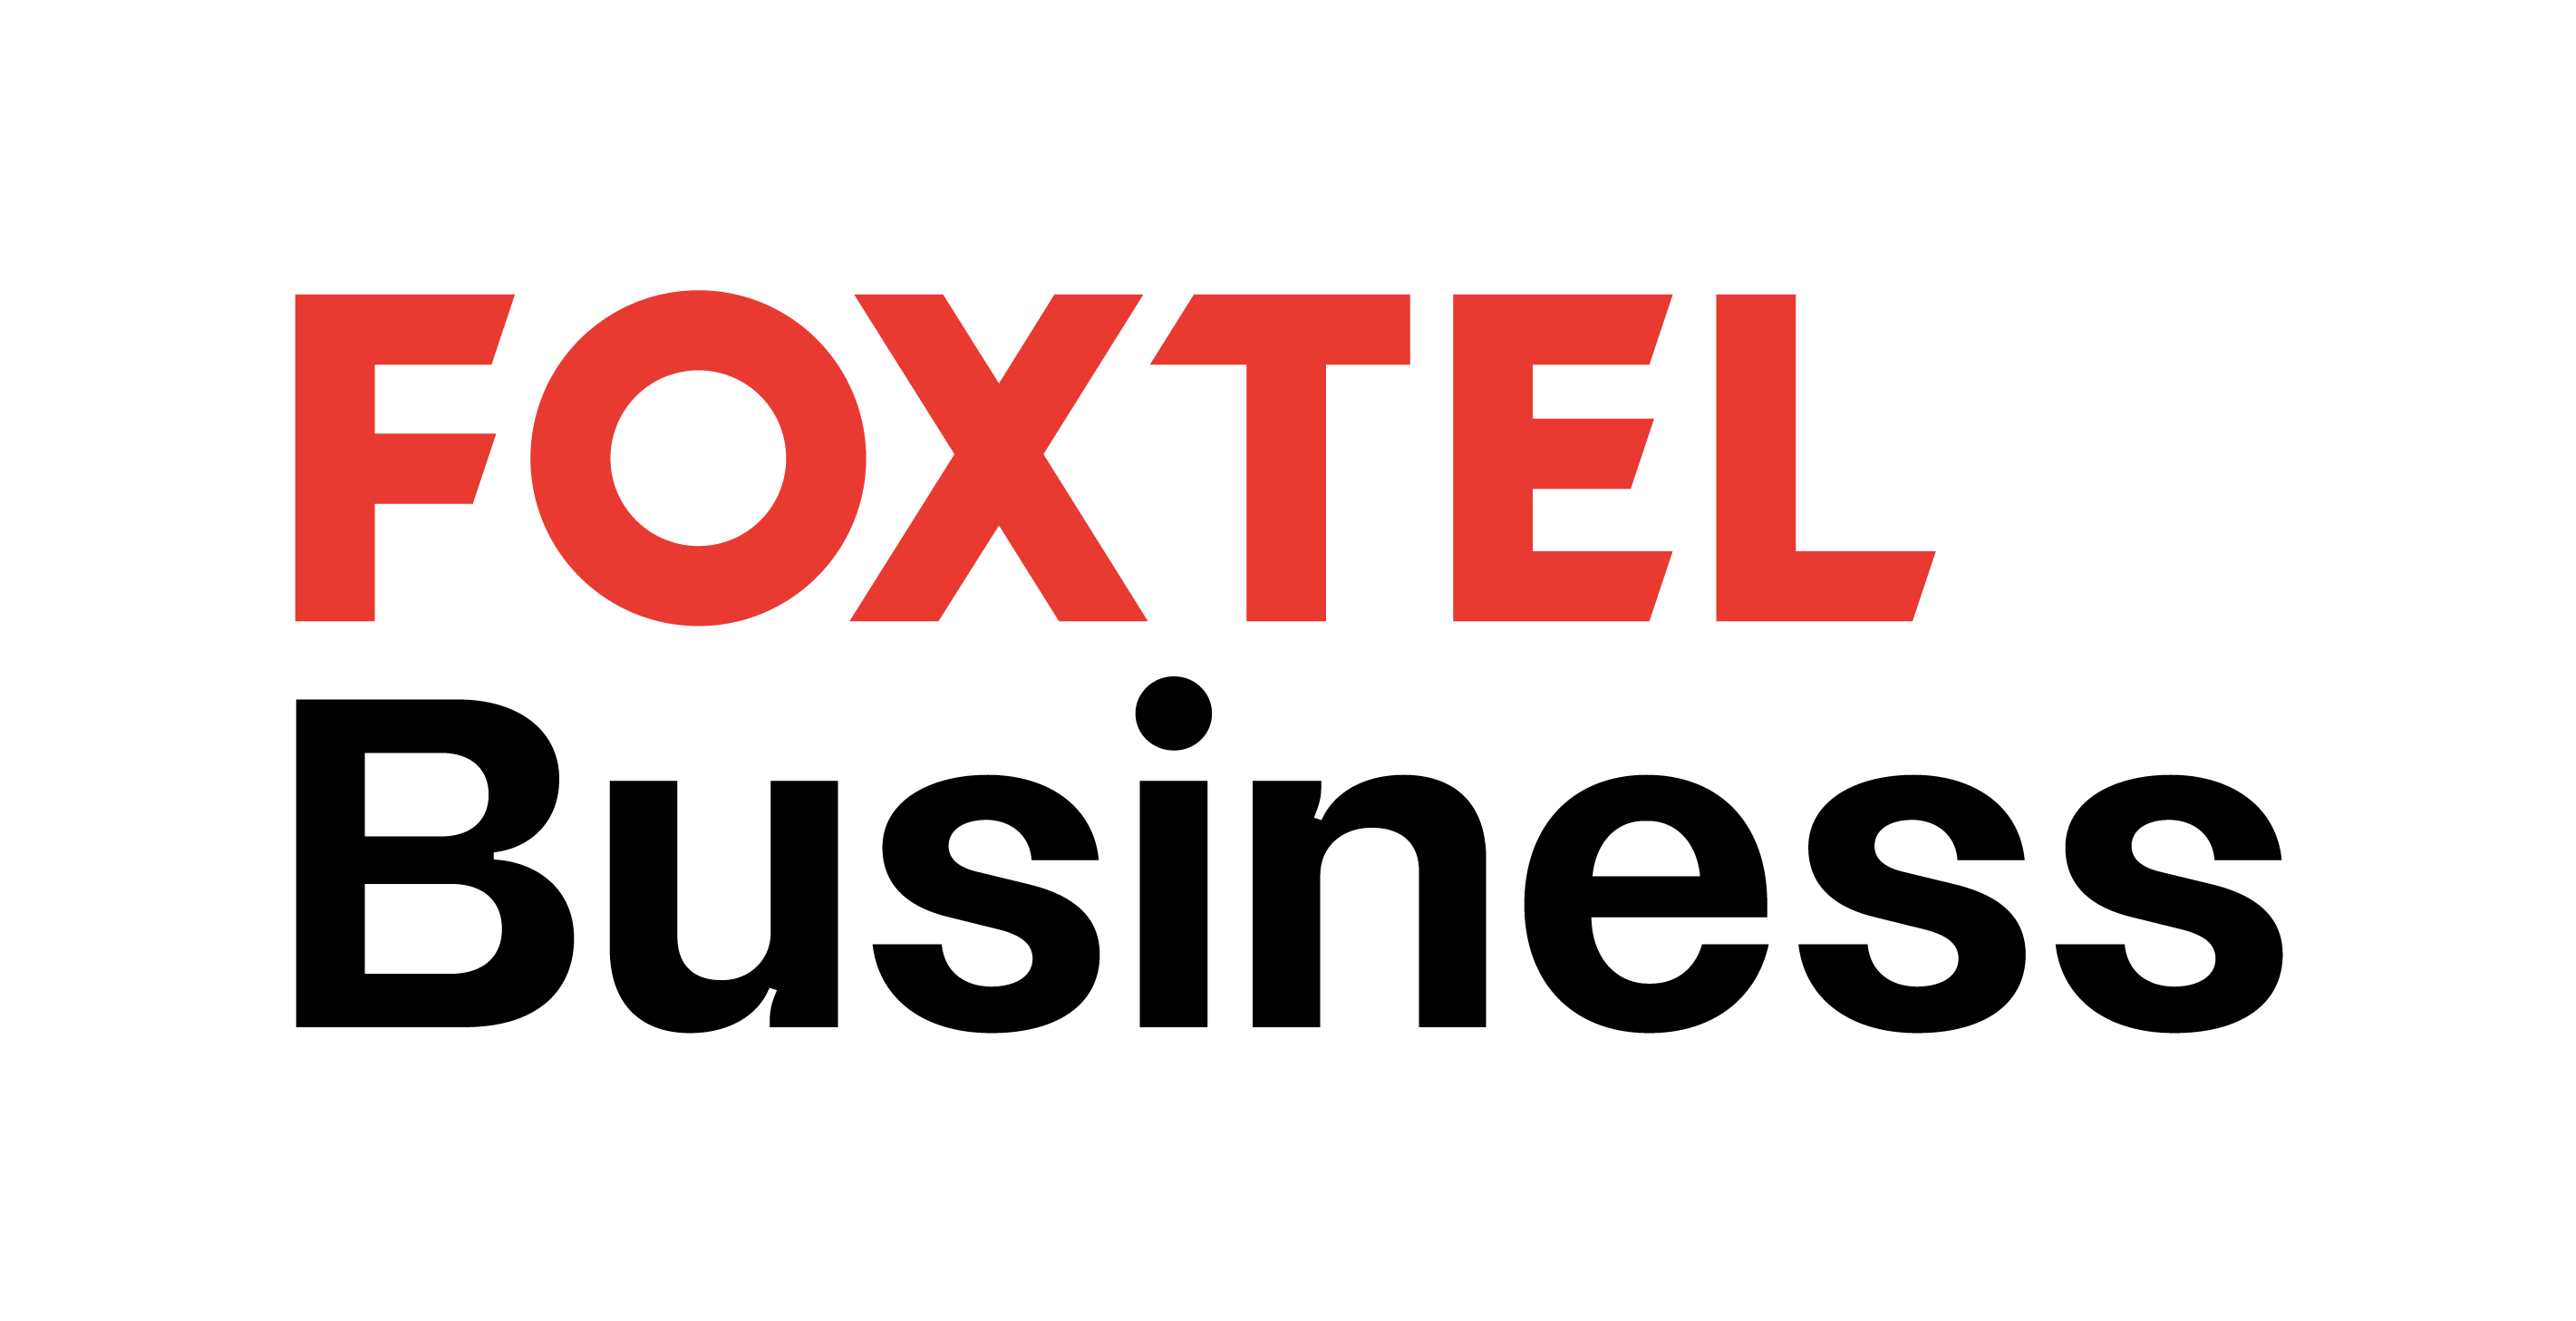 Foxtel Business